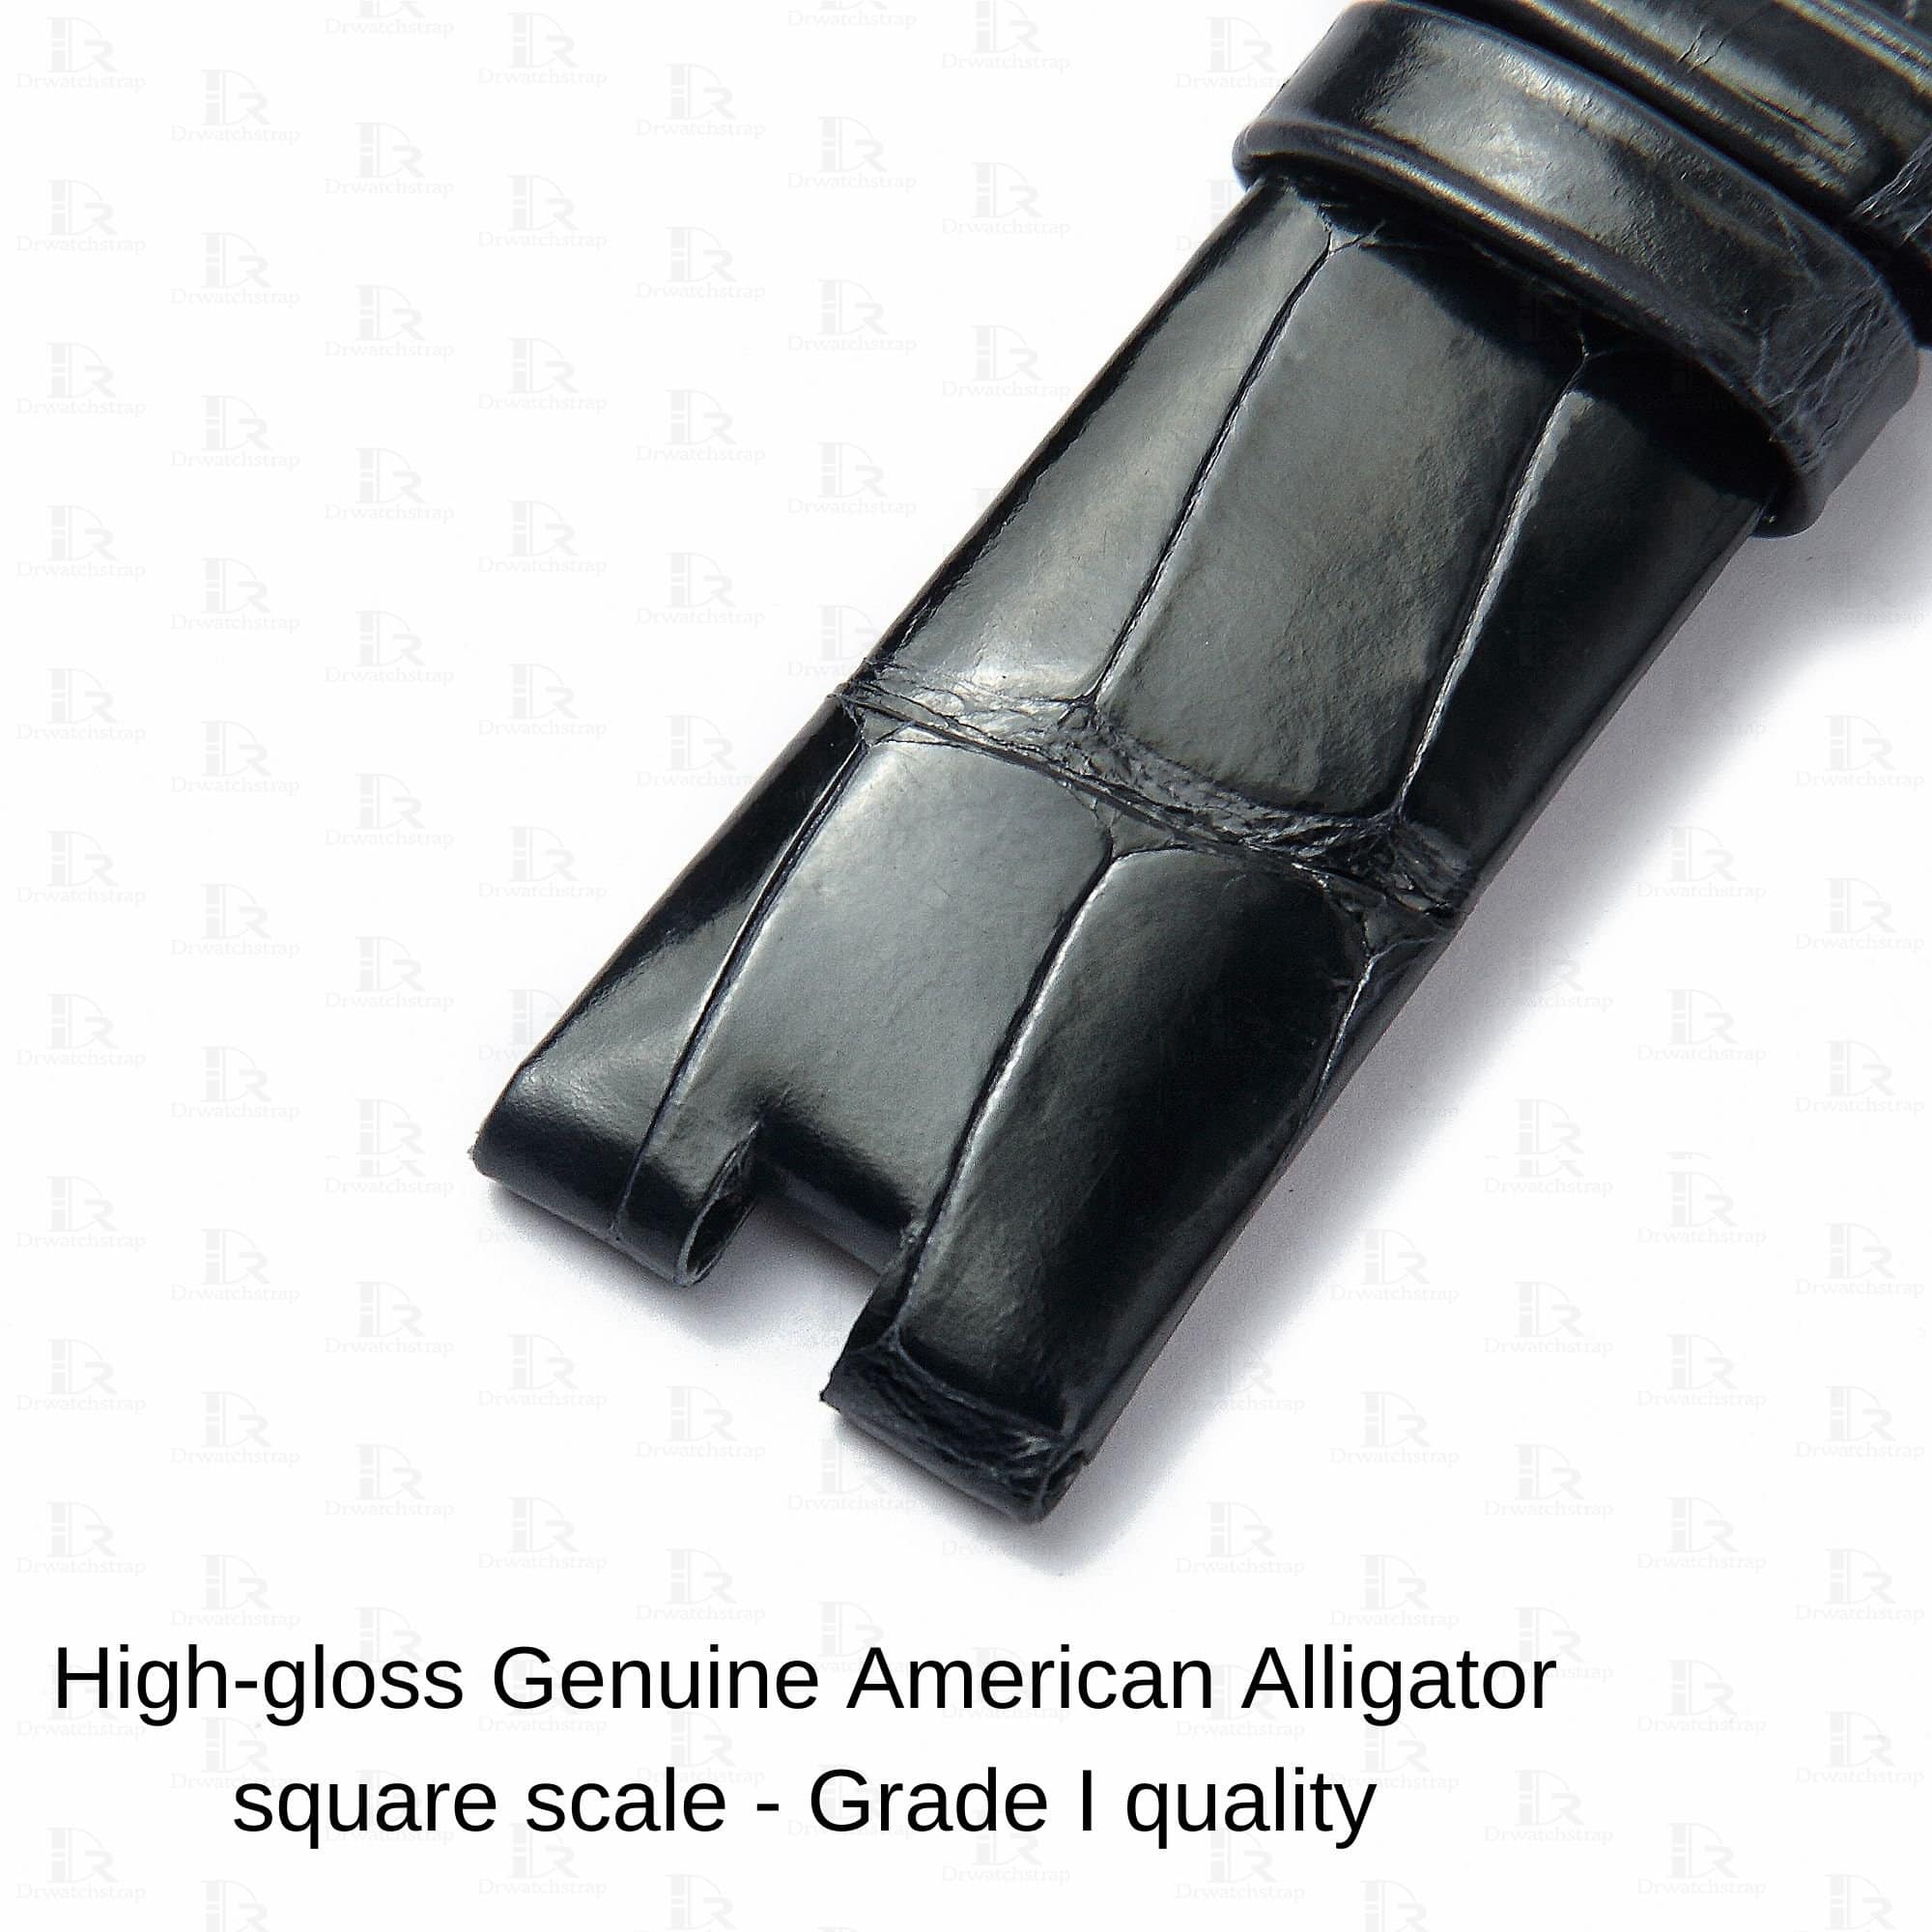 Custom Genuine Alligator watch straps for Breguet Queen of Naples Ladies watch band replacement